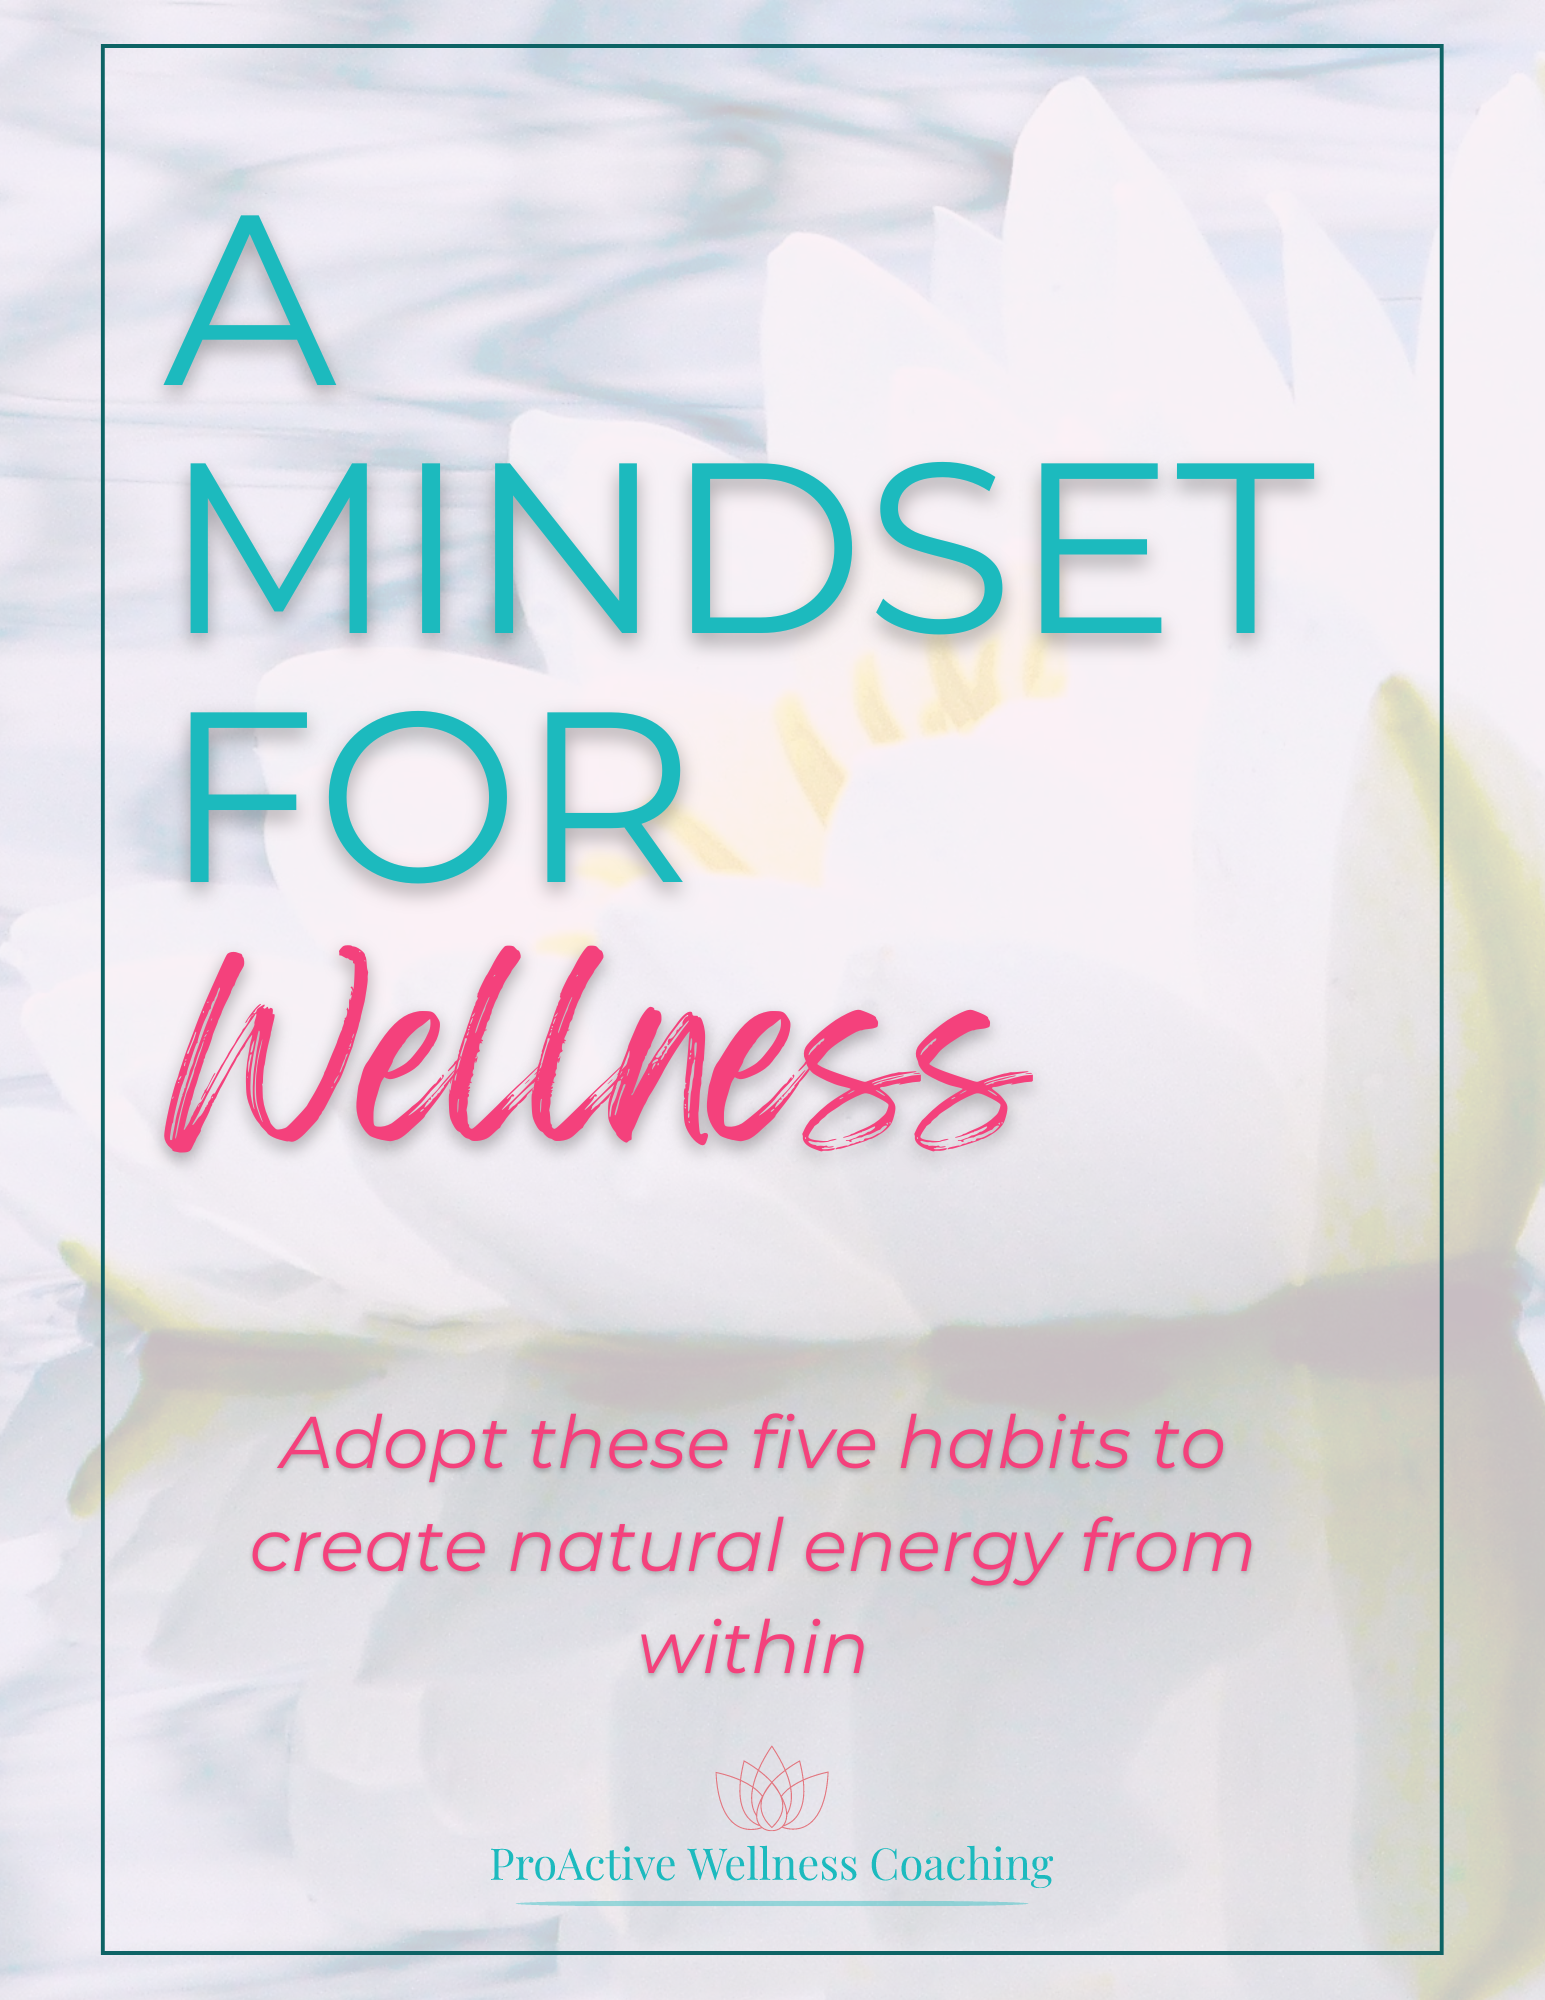 Mindset for wellness eBook